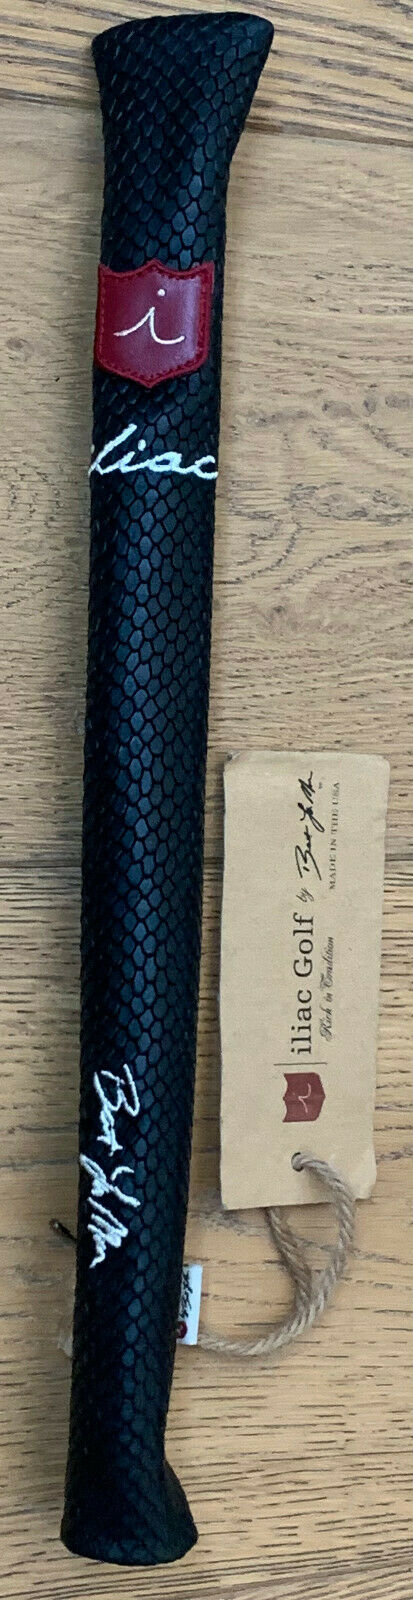 Iliac Golf Alignment Stick Rod Cover Black Boa Genuine Leather 14.5 Usa Made New